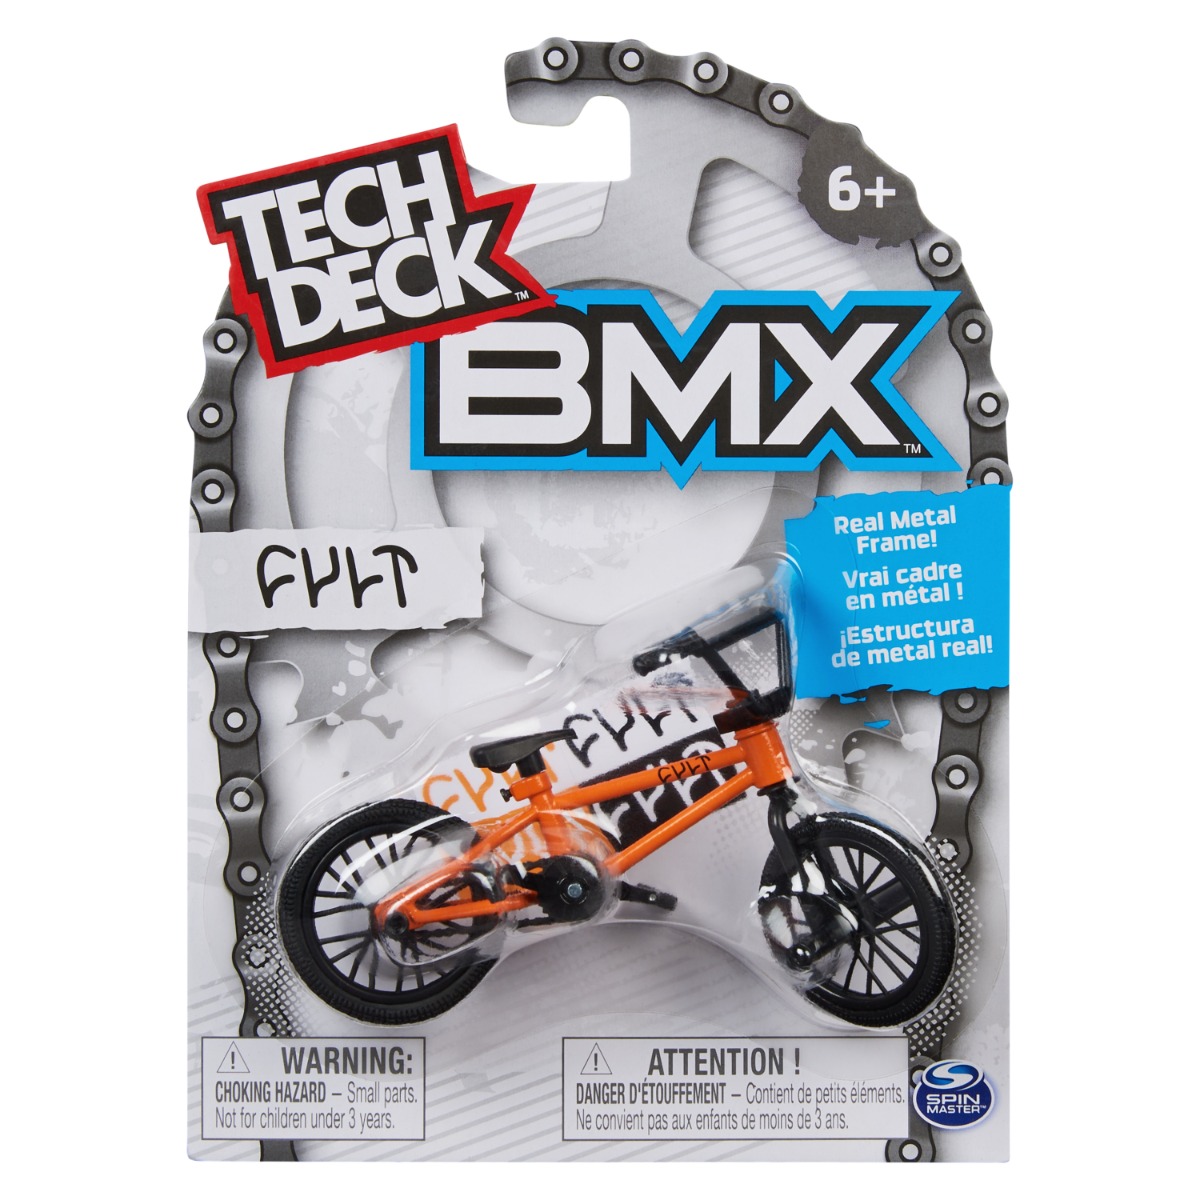 Mini BMX bike, Tech Deck, Cult, 20140828 20140828 imagine 2022 protejamcopilaria.ro